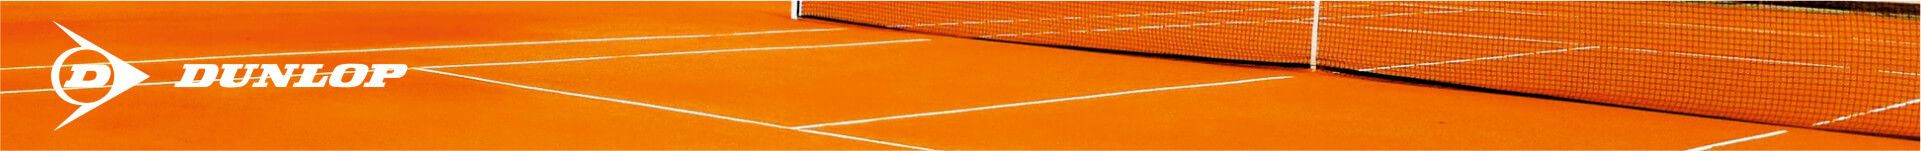 Racchette Dunlop - Tennis Corner